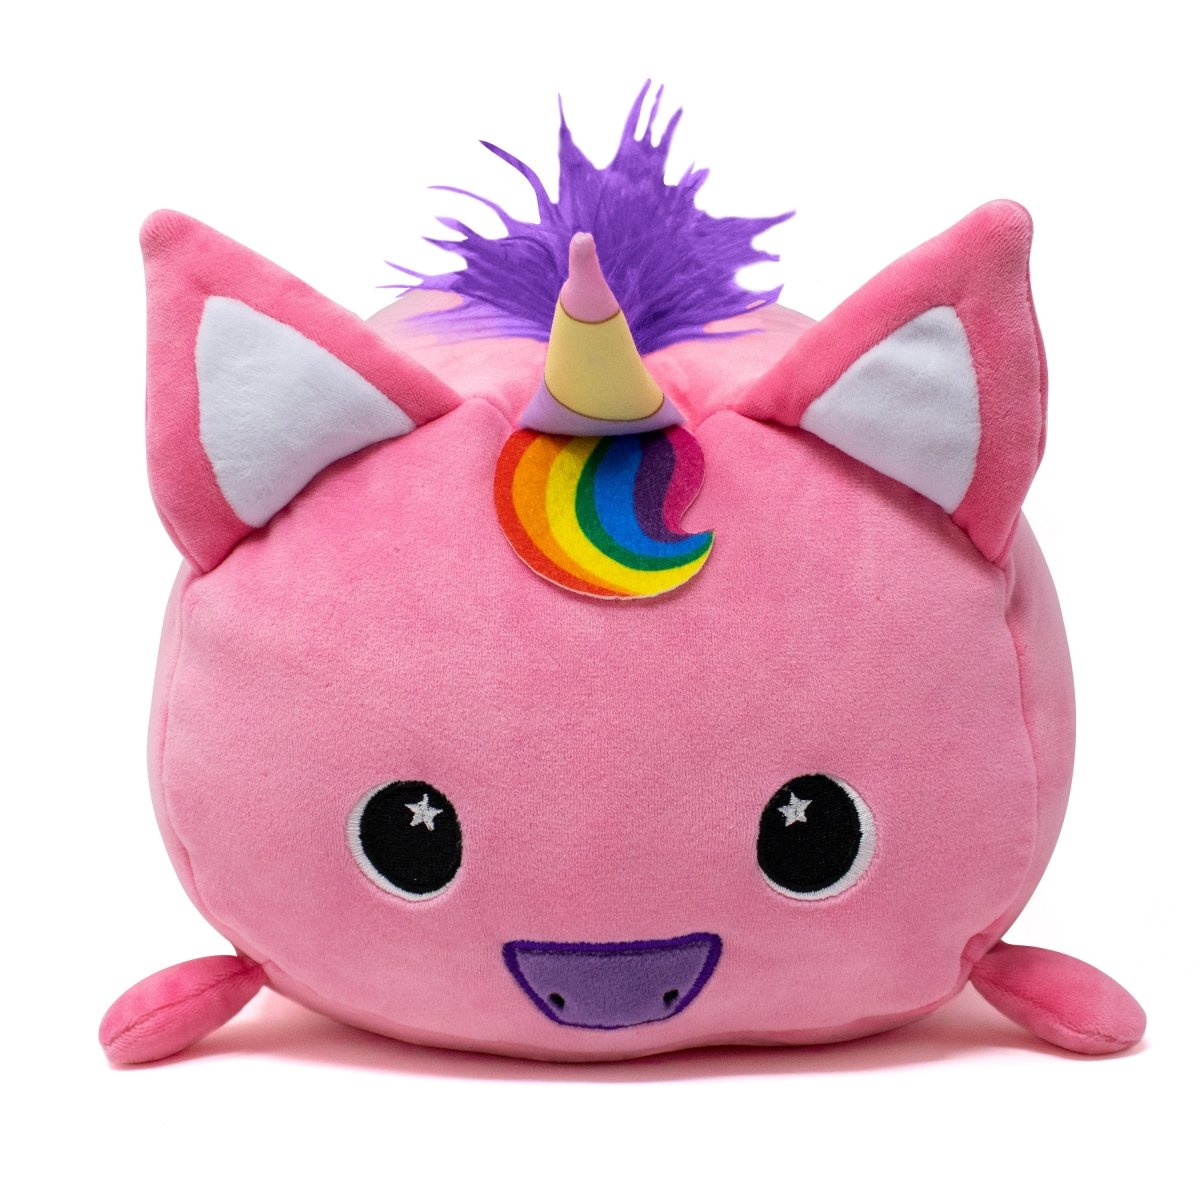 Pink Unicorn Stuffed Animal with Rainbow Hair